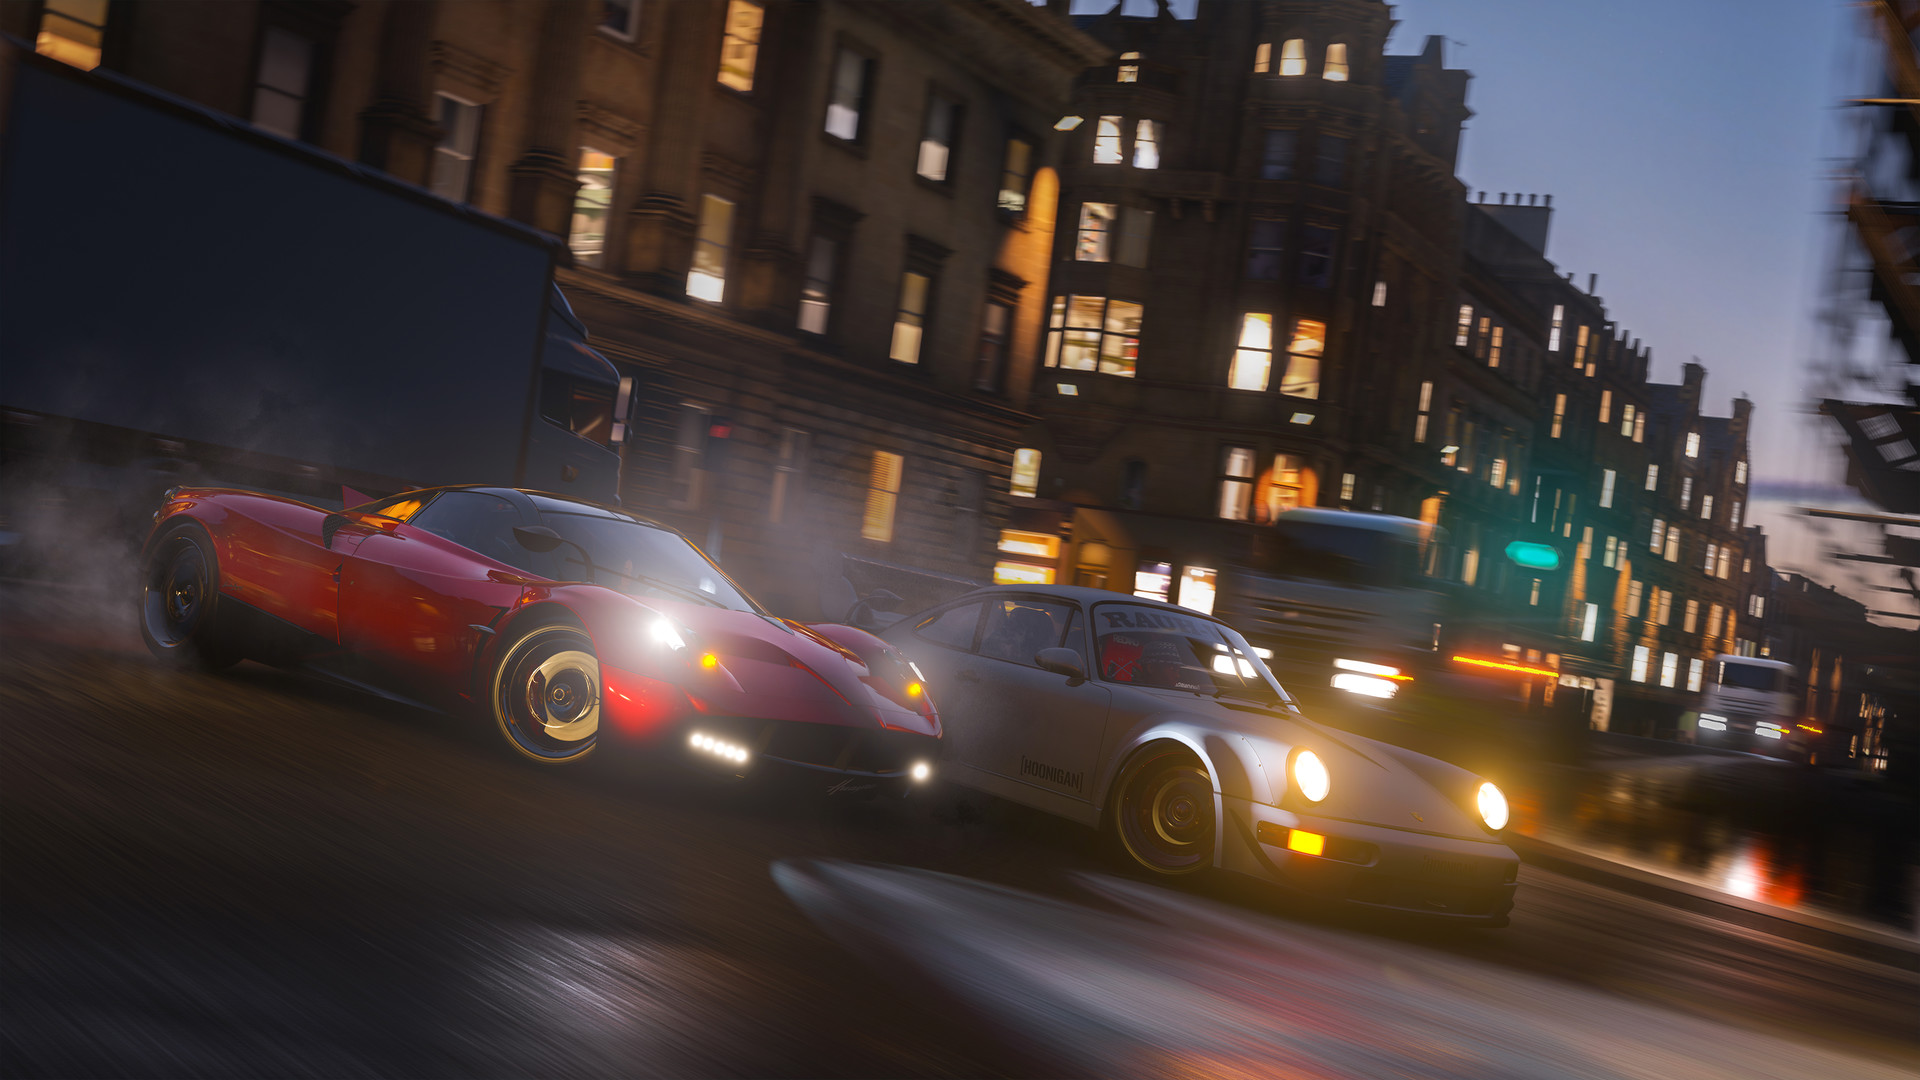 Forza Horizon 4 Review